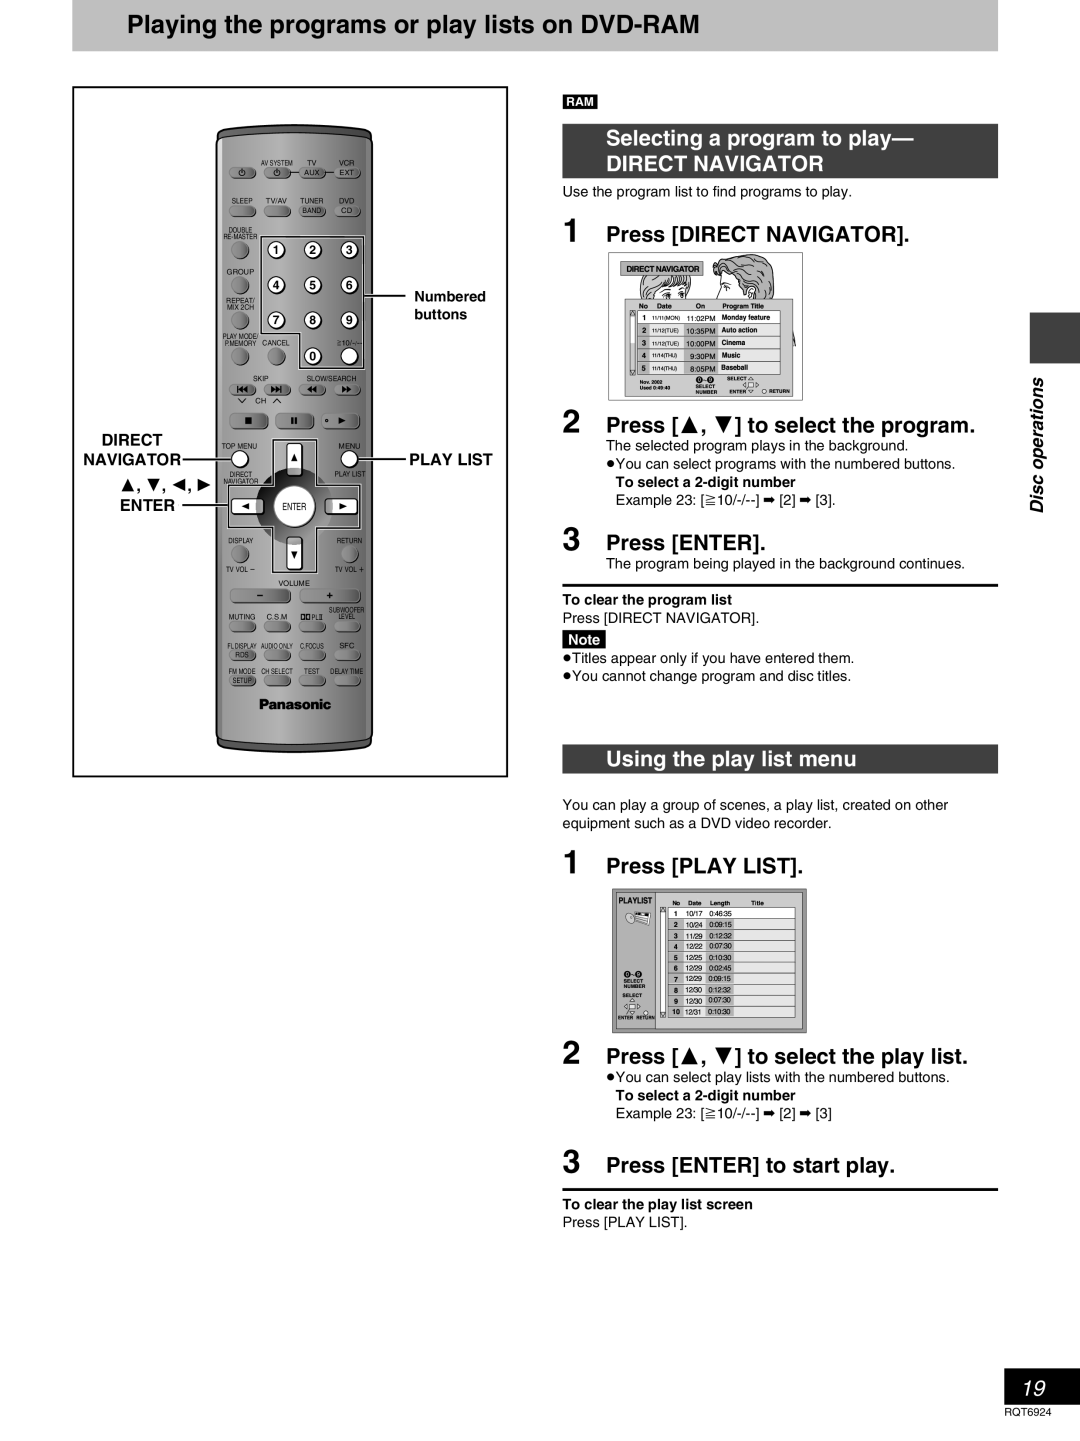 Panasonic SC-DT310 Nov.2002, Used0, Enter Return, Playing the programs or play lists on DVD-RAM, Press DIRECT NAVIGATOR 